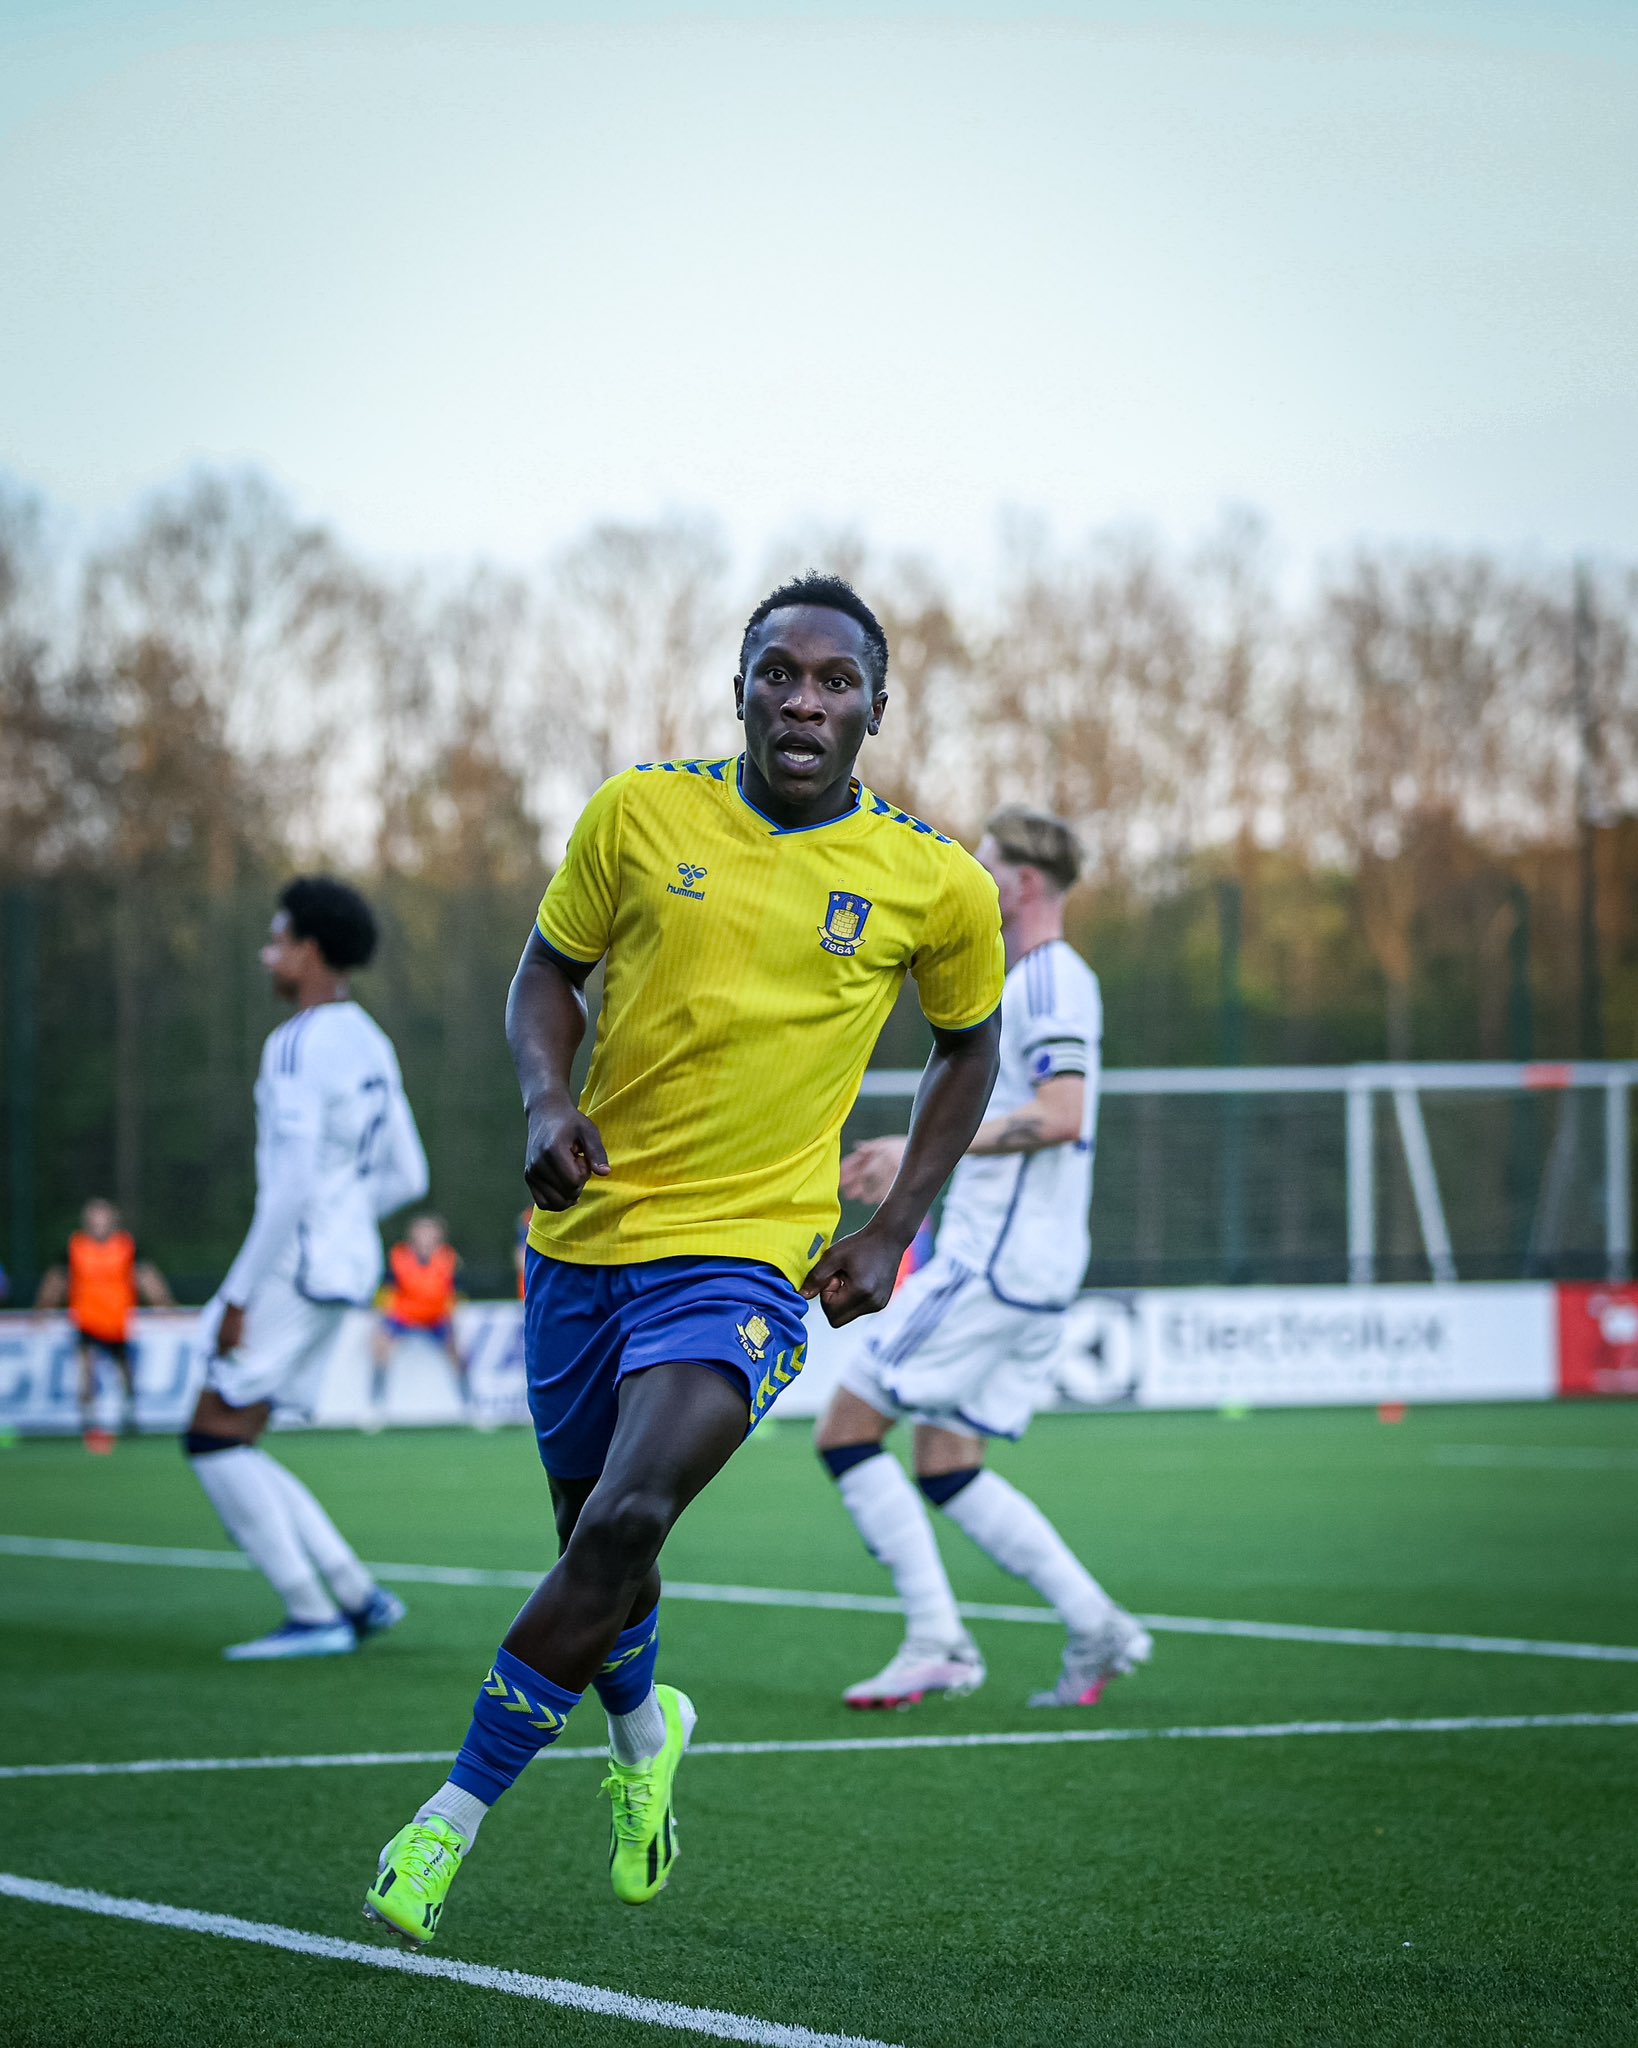 VIDEO: Watch Jonathan Agyekum's sublime finish for Brongby U19 in win over Copenhagen